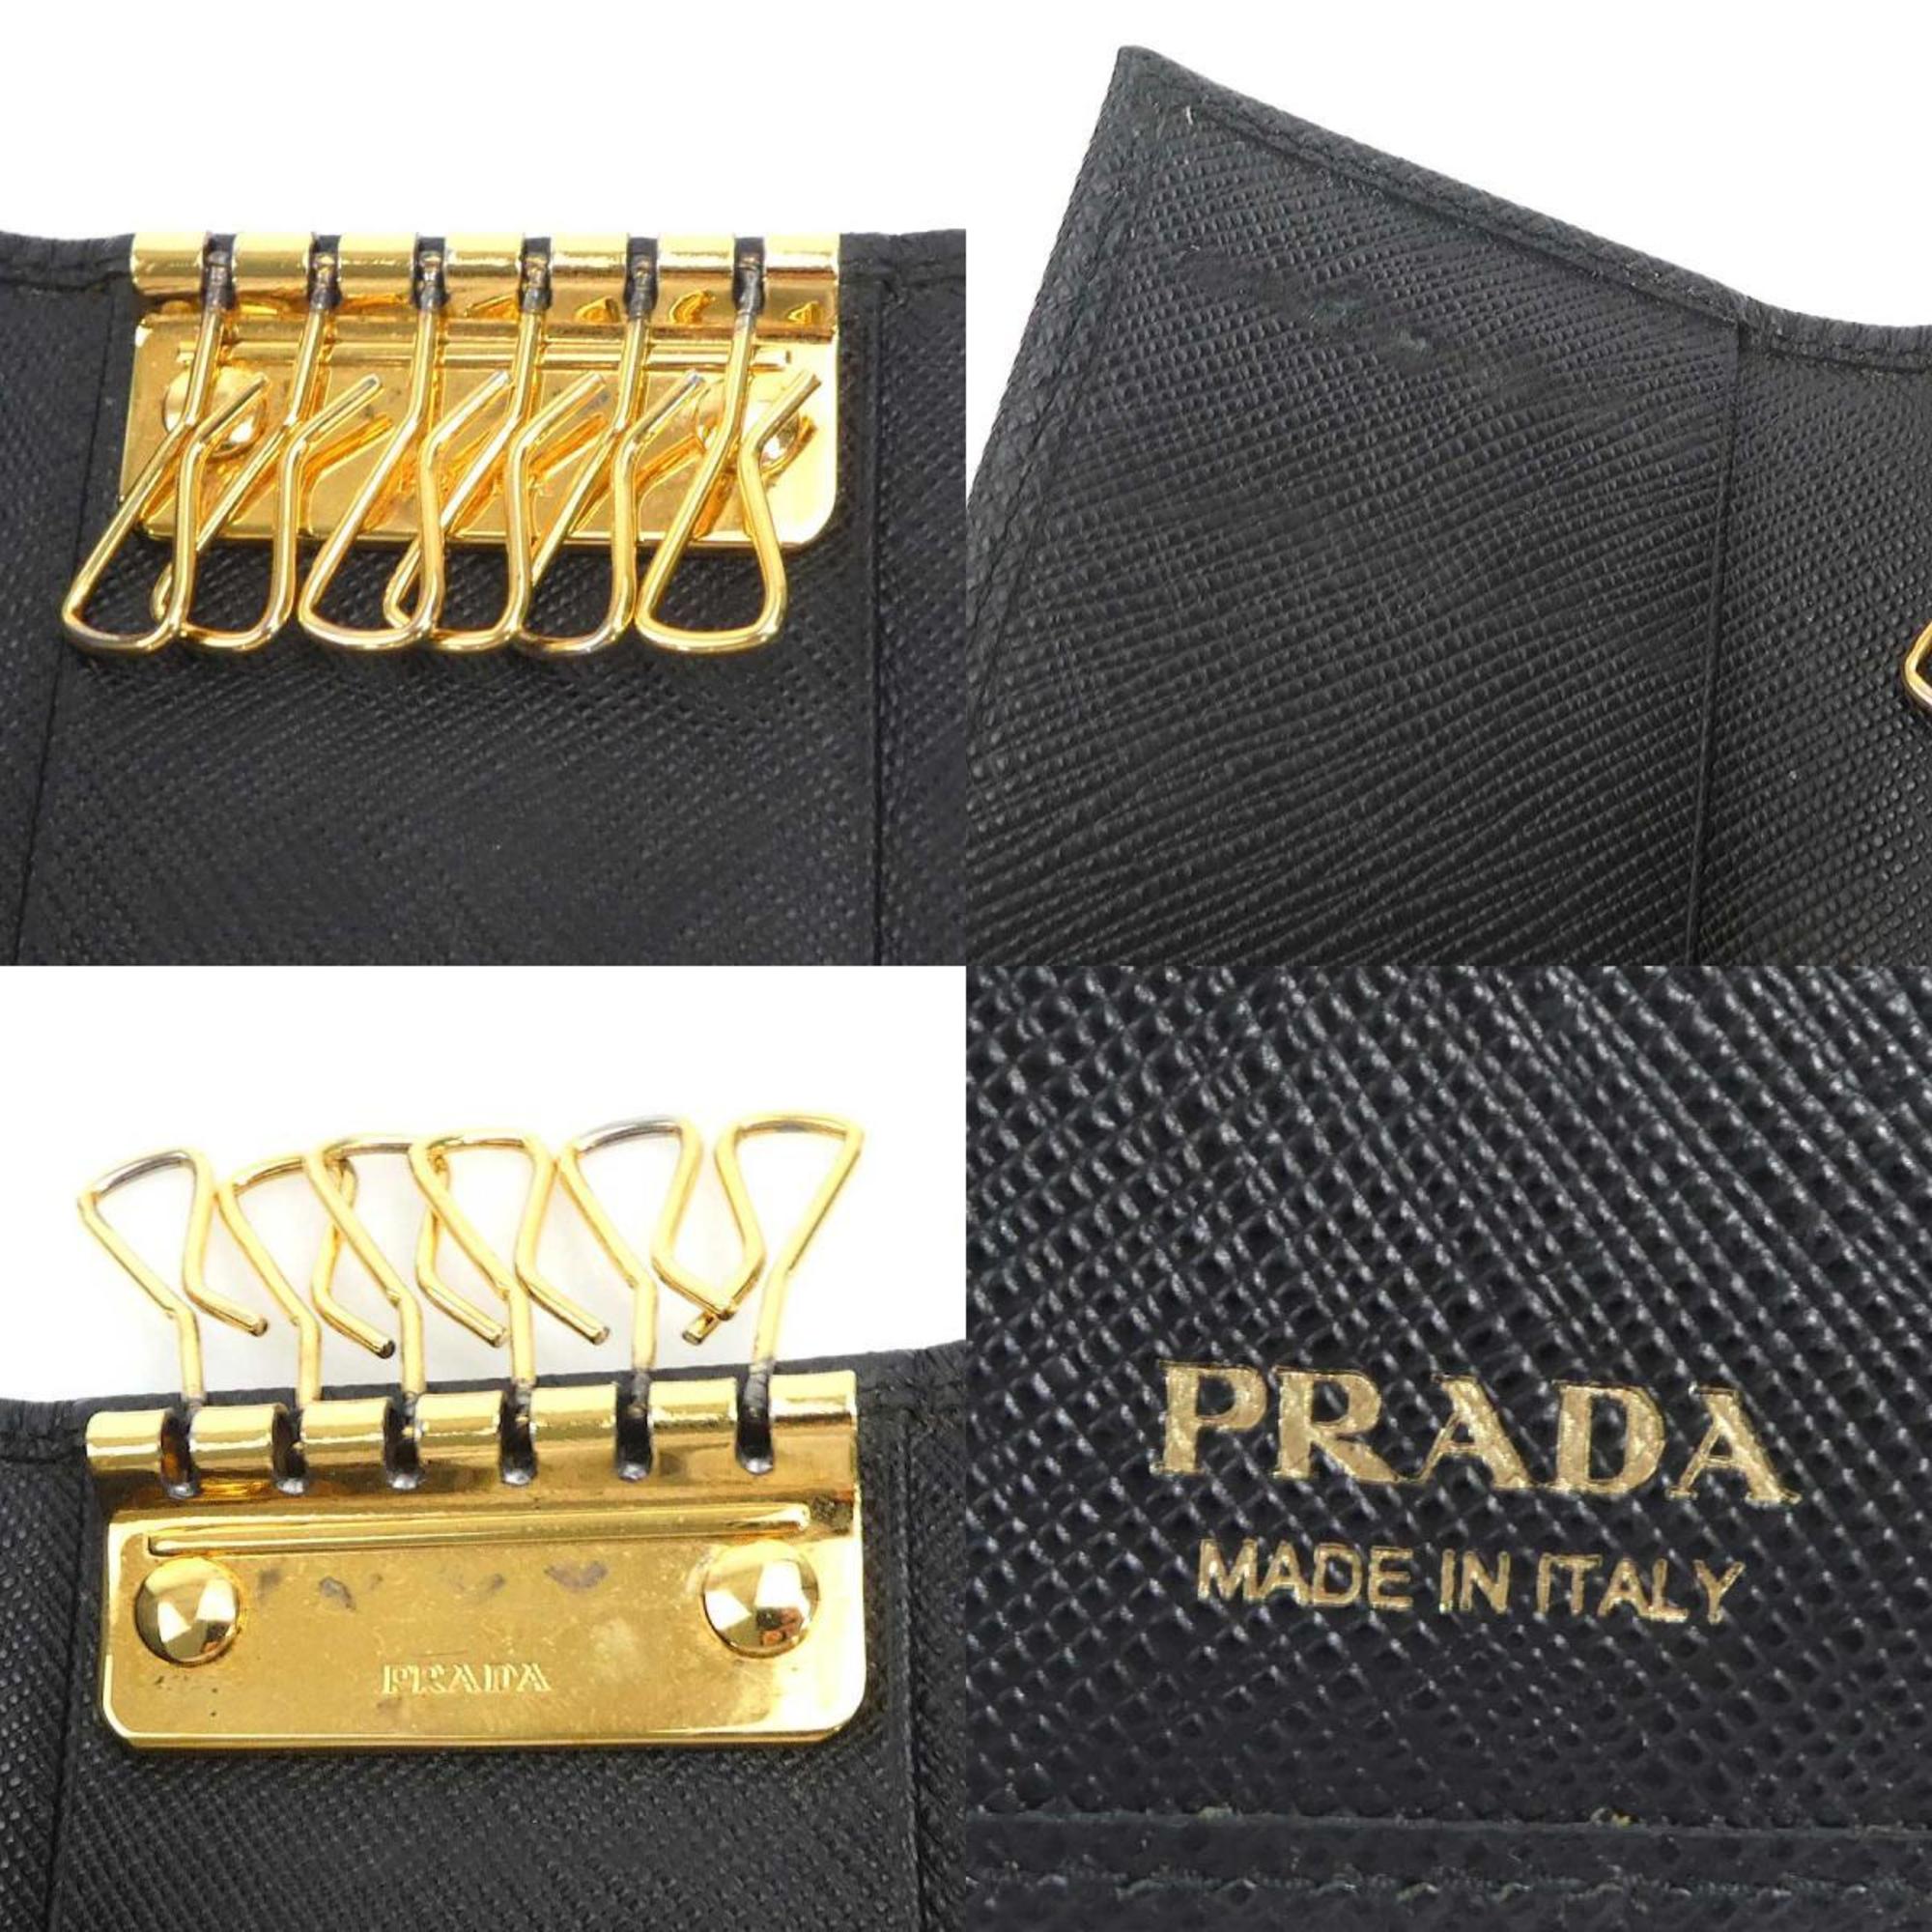 PRADA key case leather metal black gold women's e58726f